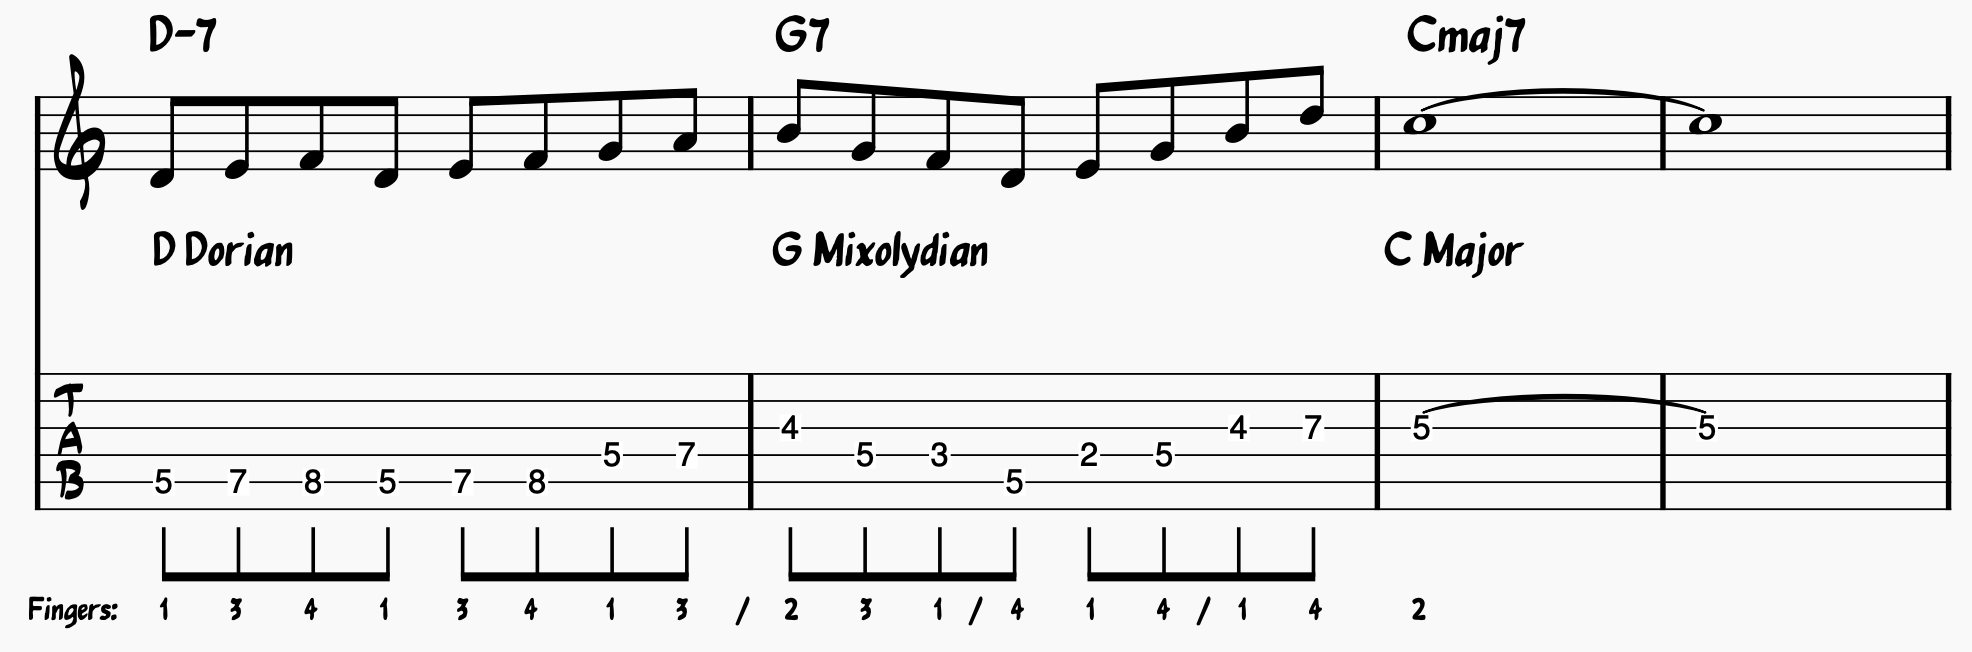 D Dorian mode used in a ii-V-I chord progression